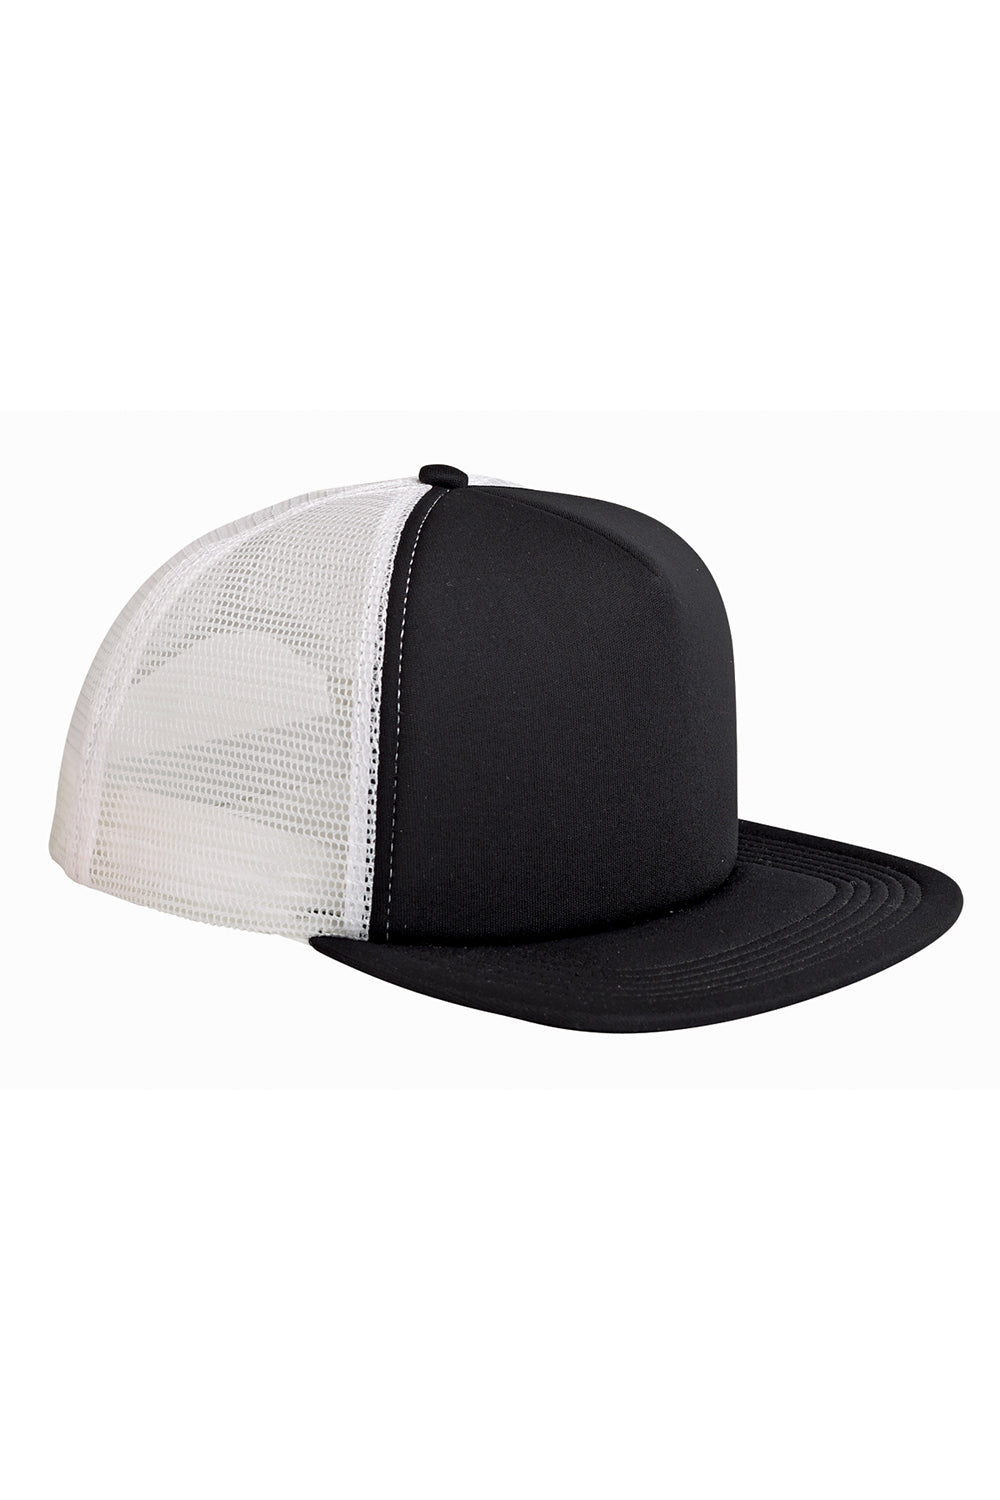 Big Accessories BX030 Mens Adjustable Trucker Hat Black/White Flat Front